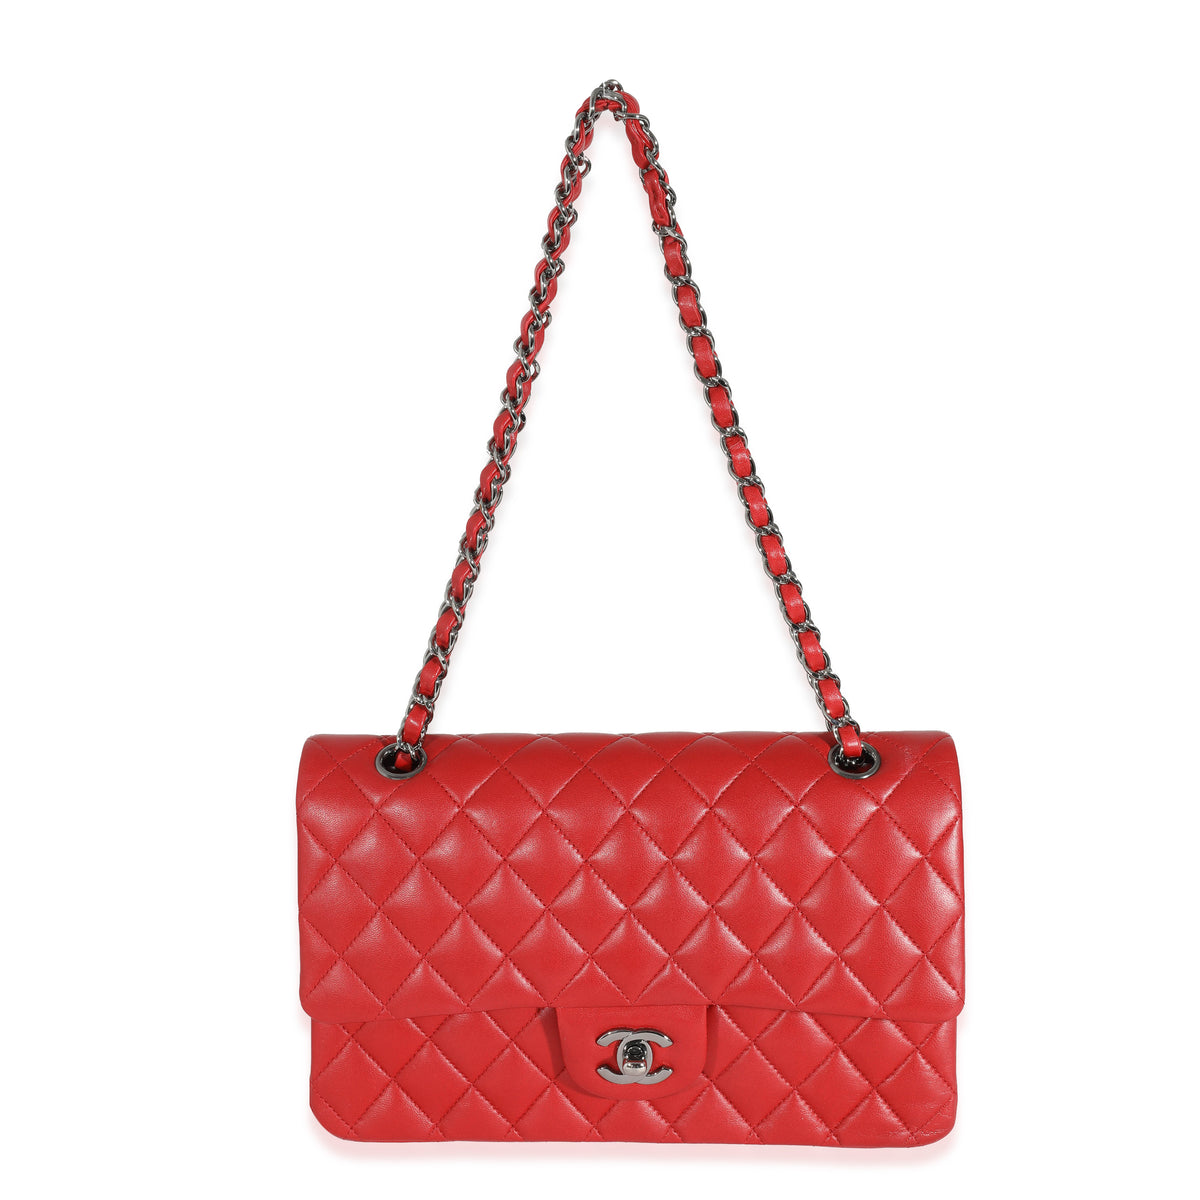 Chanel Red Lambskin Medium Classic Double Flap Bag